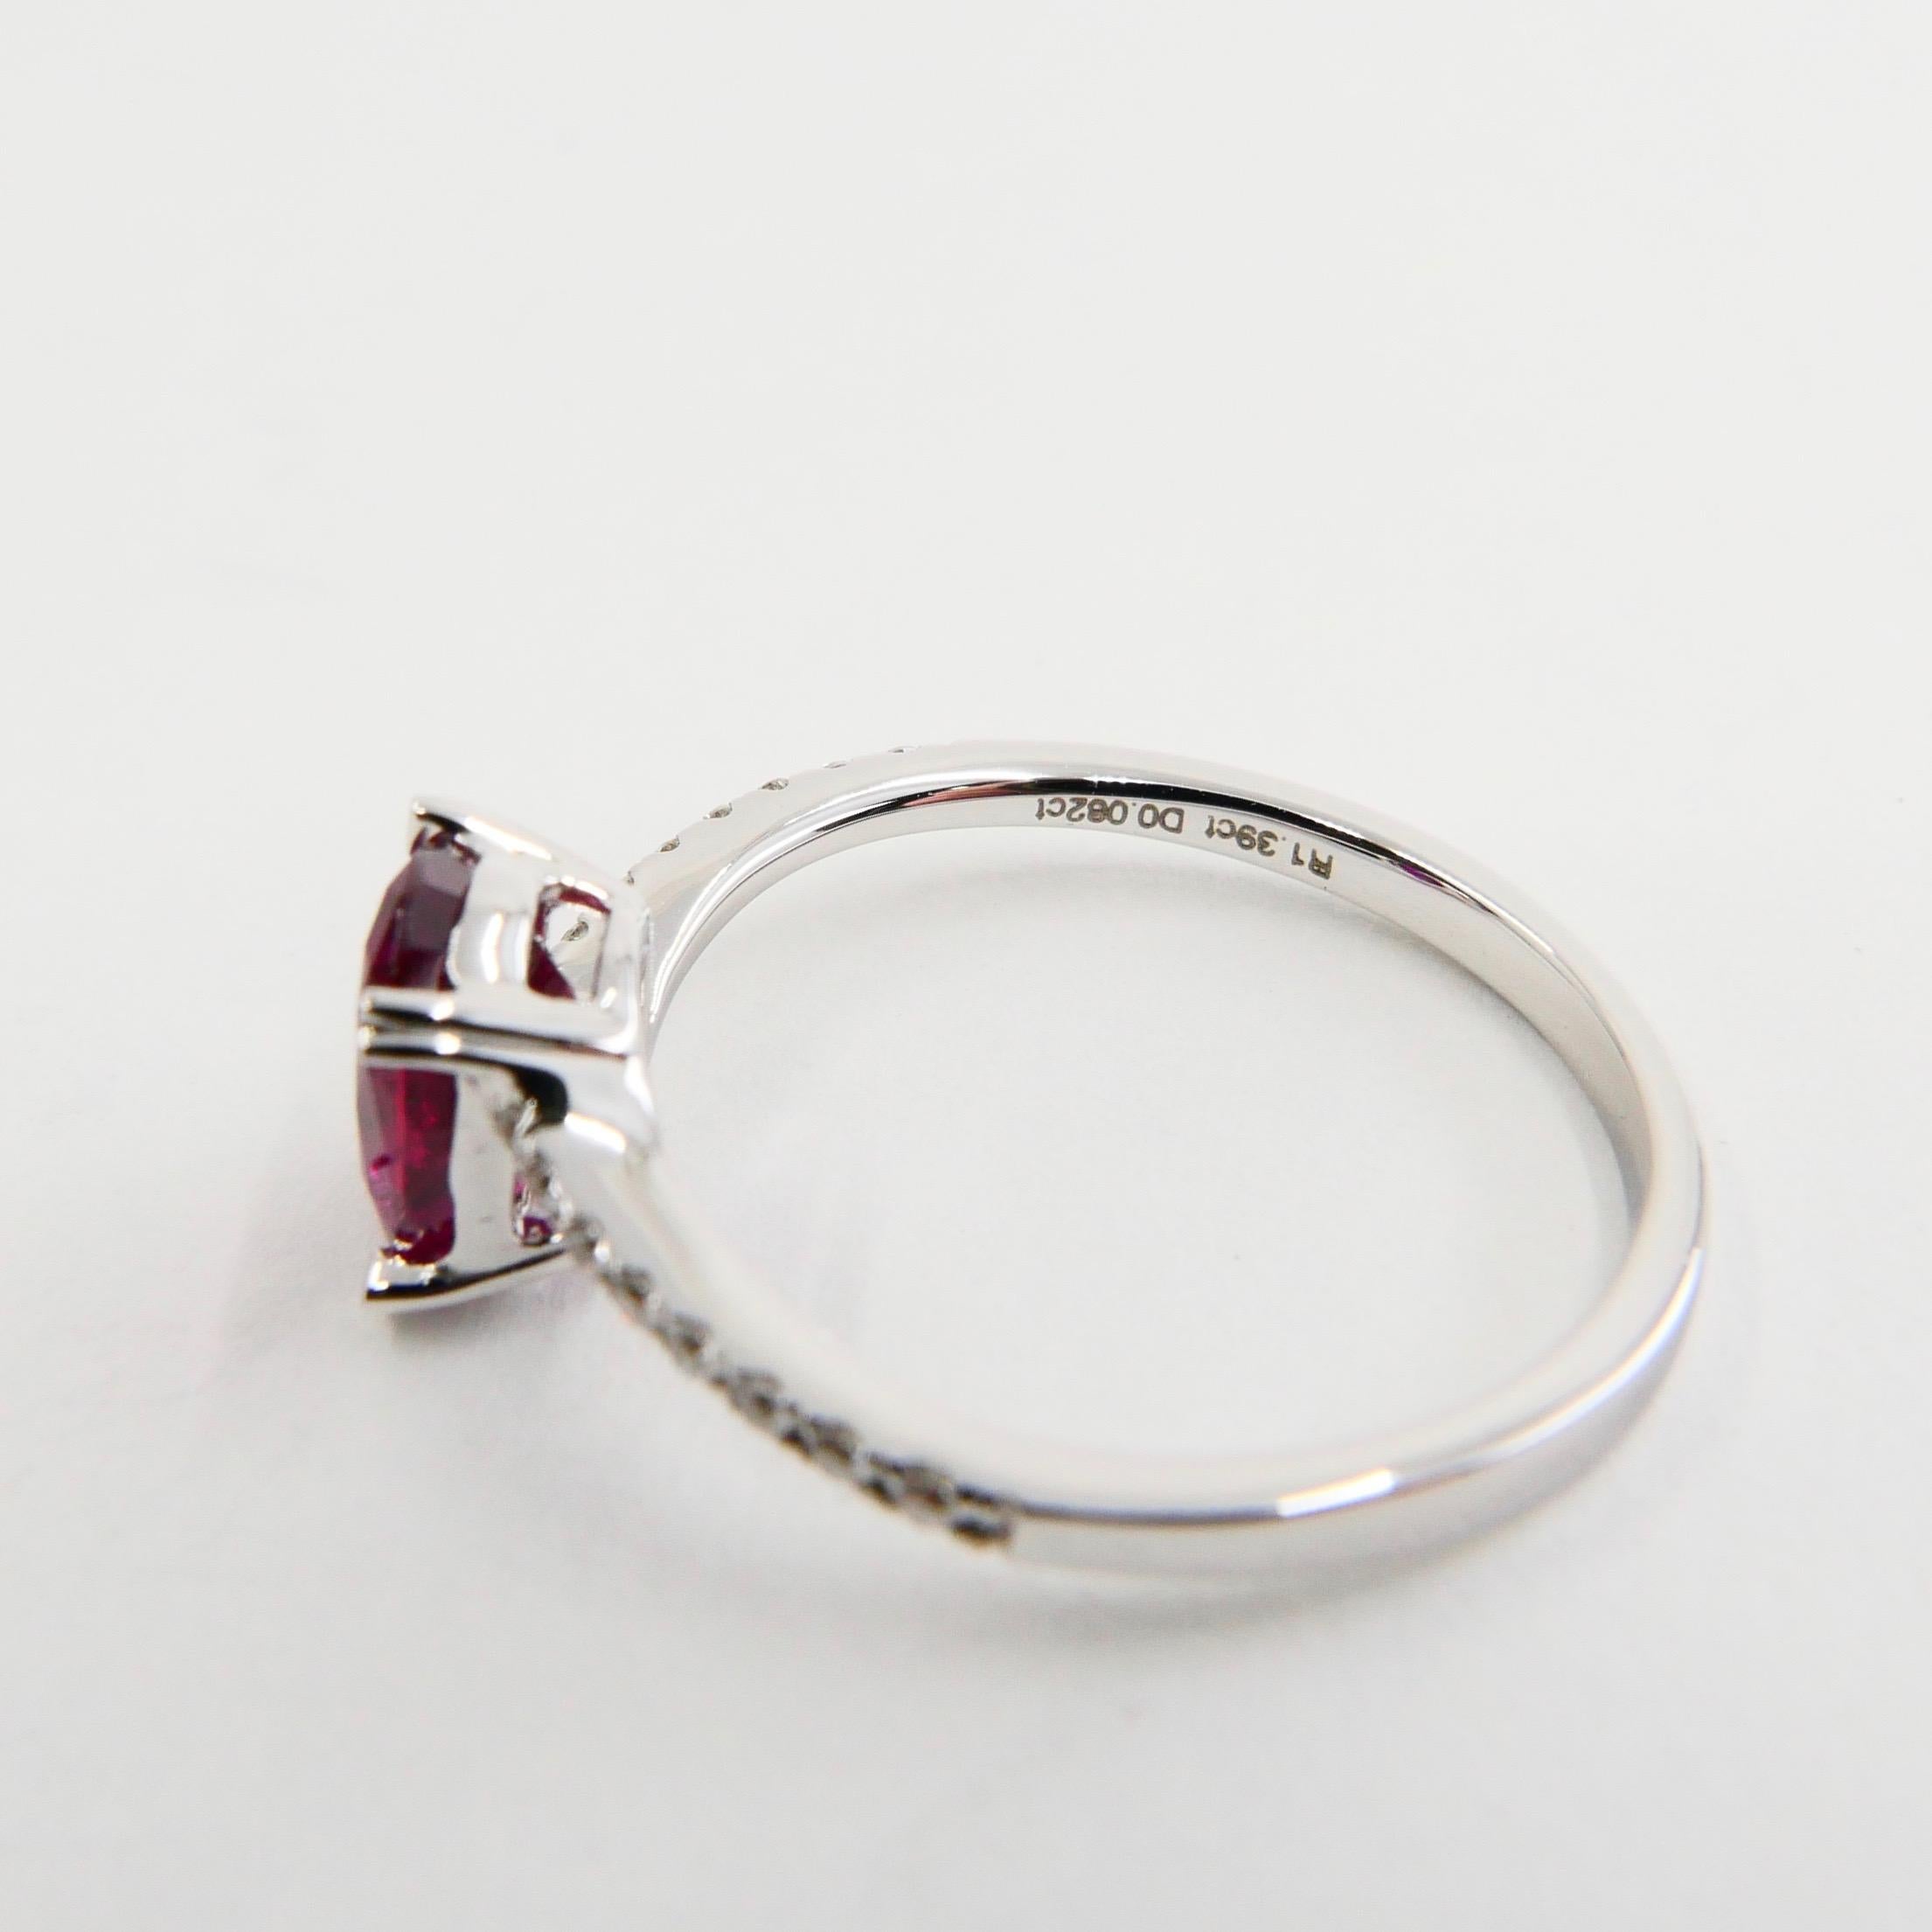 Oval Cut Burma Ruby 1.39 Carat and Diamond Ring, 18 Karat Gold, Heart Shaped Prongs For Sale